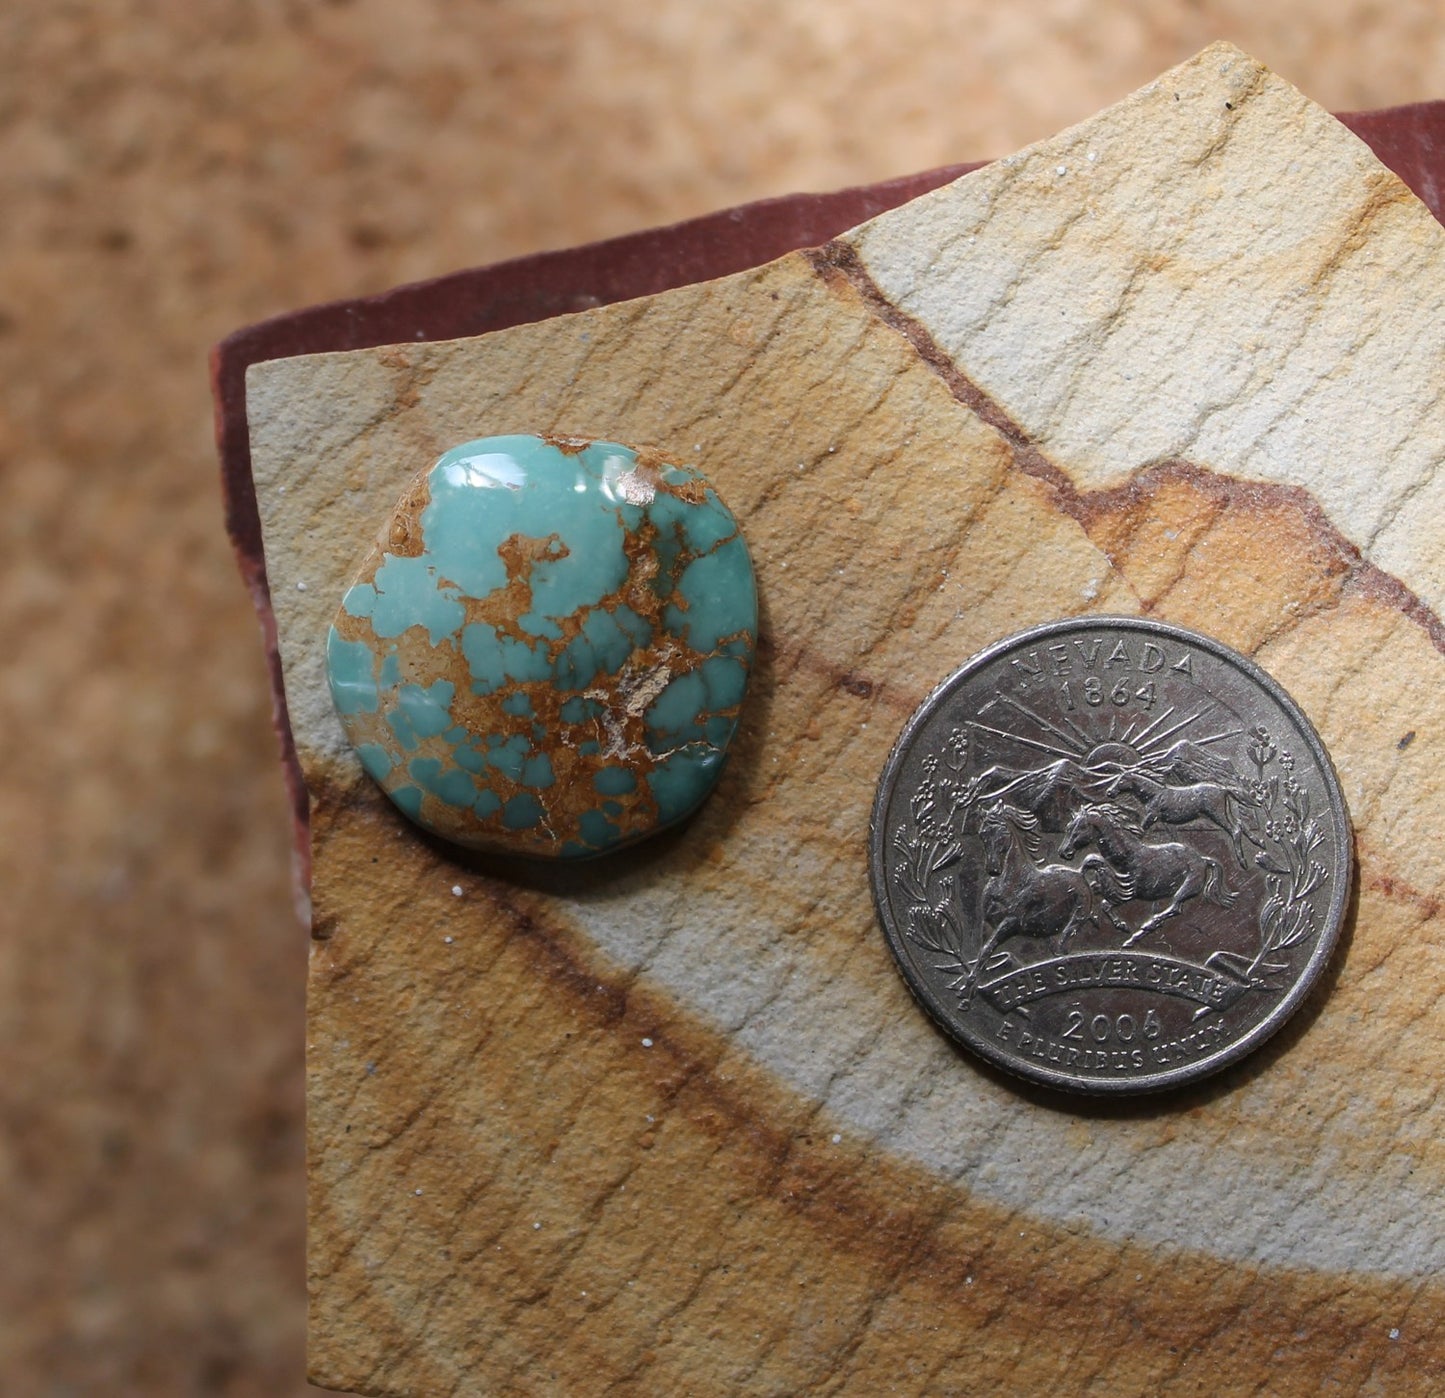 16.5 carat blue Stone Mountain Turquoise cabochon with orange-red matrix